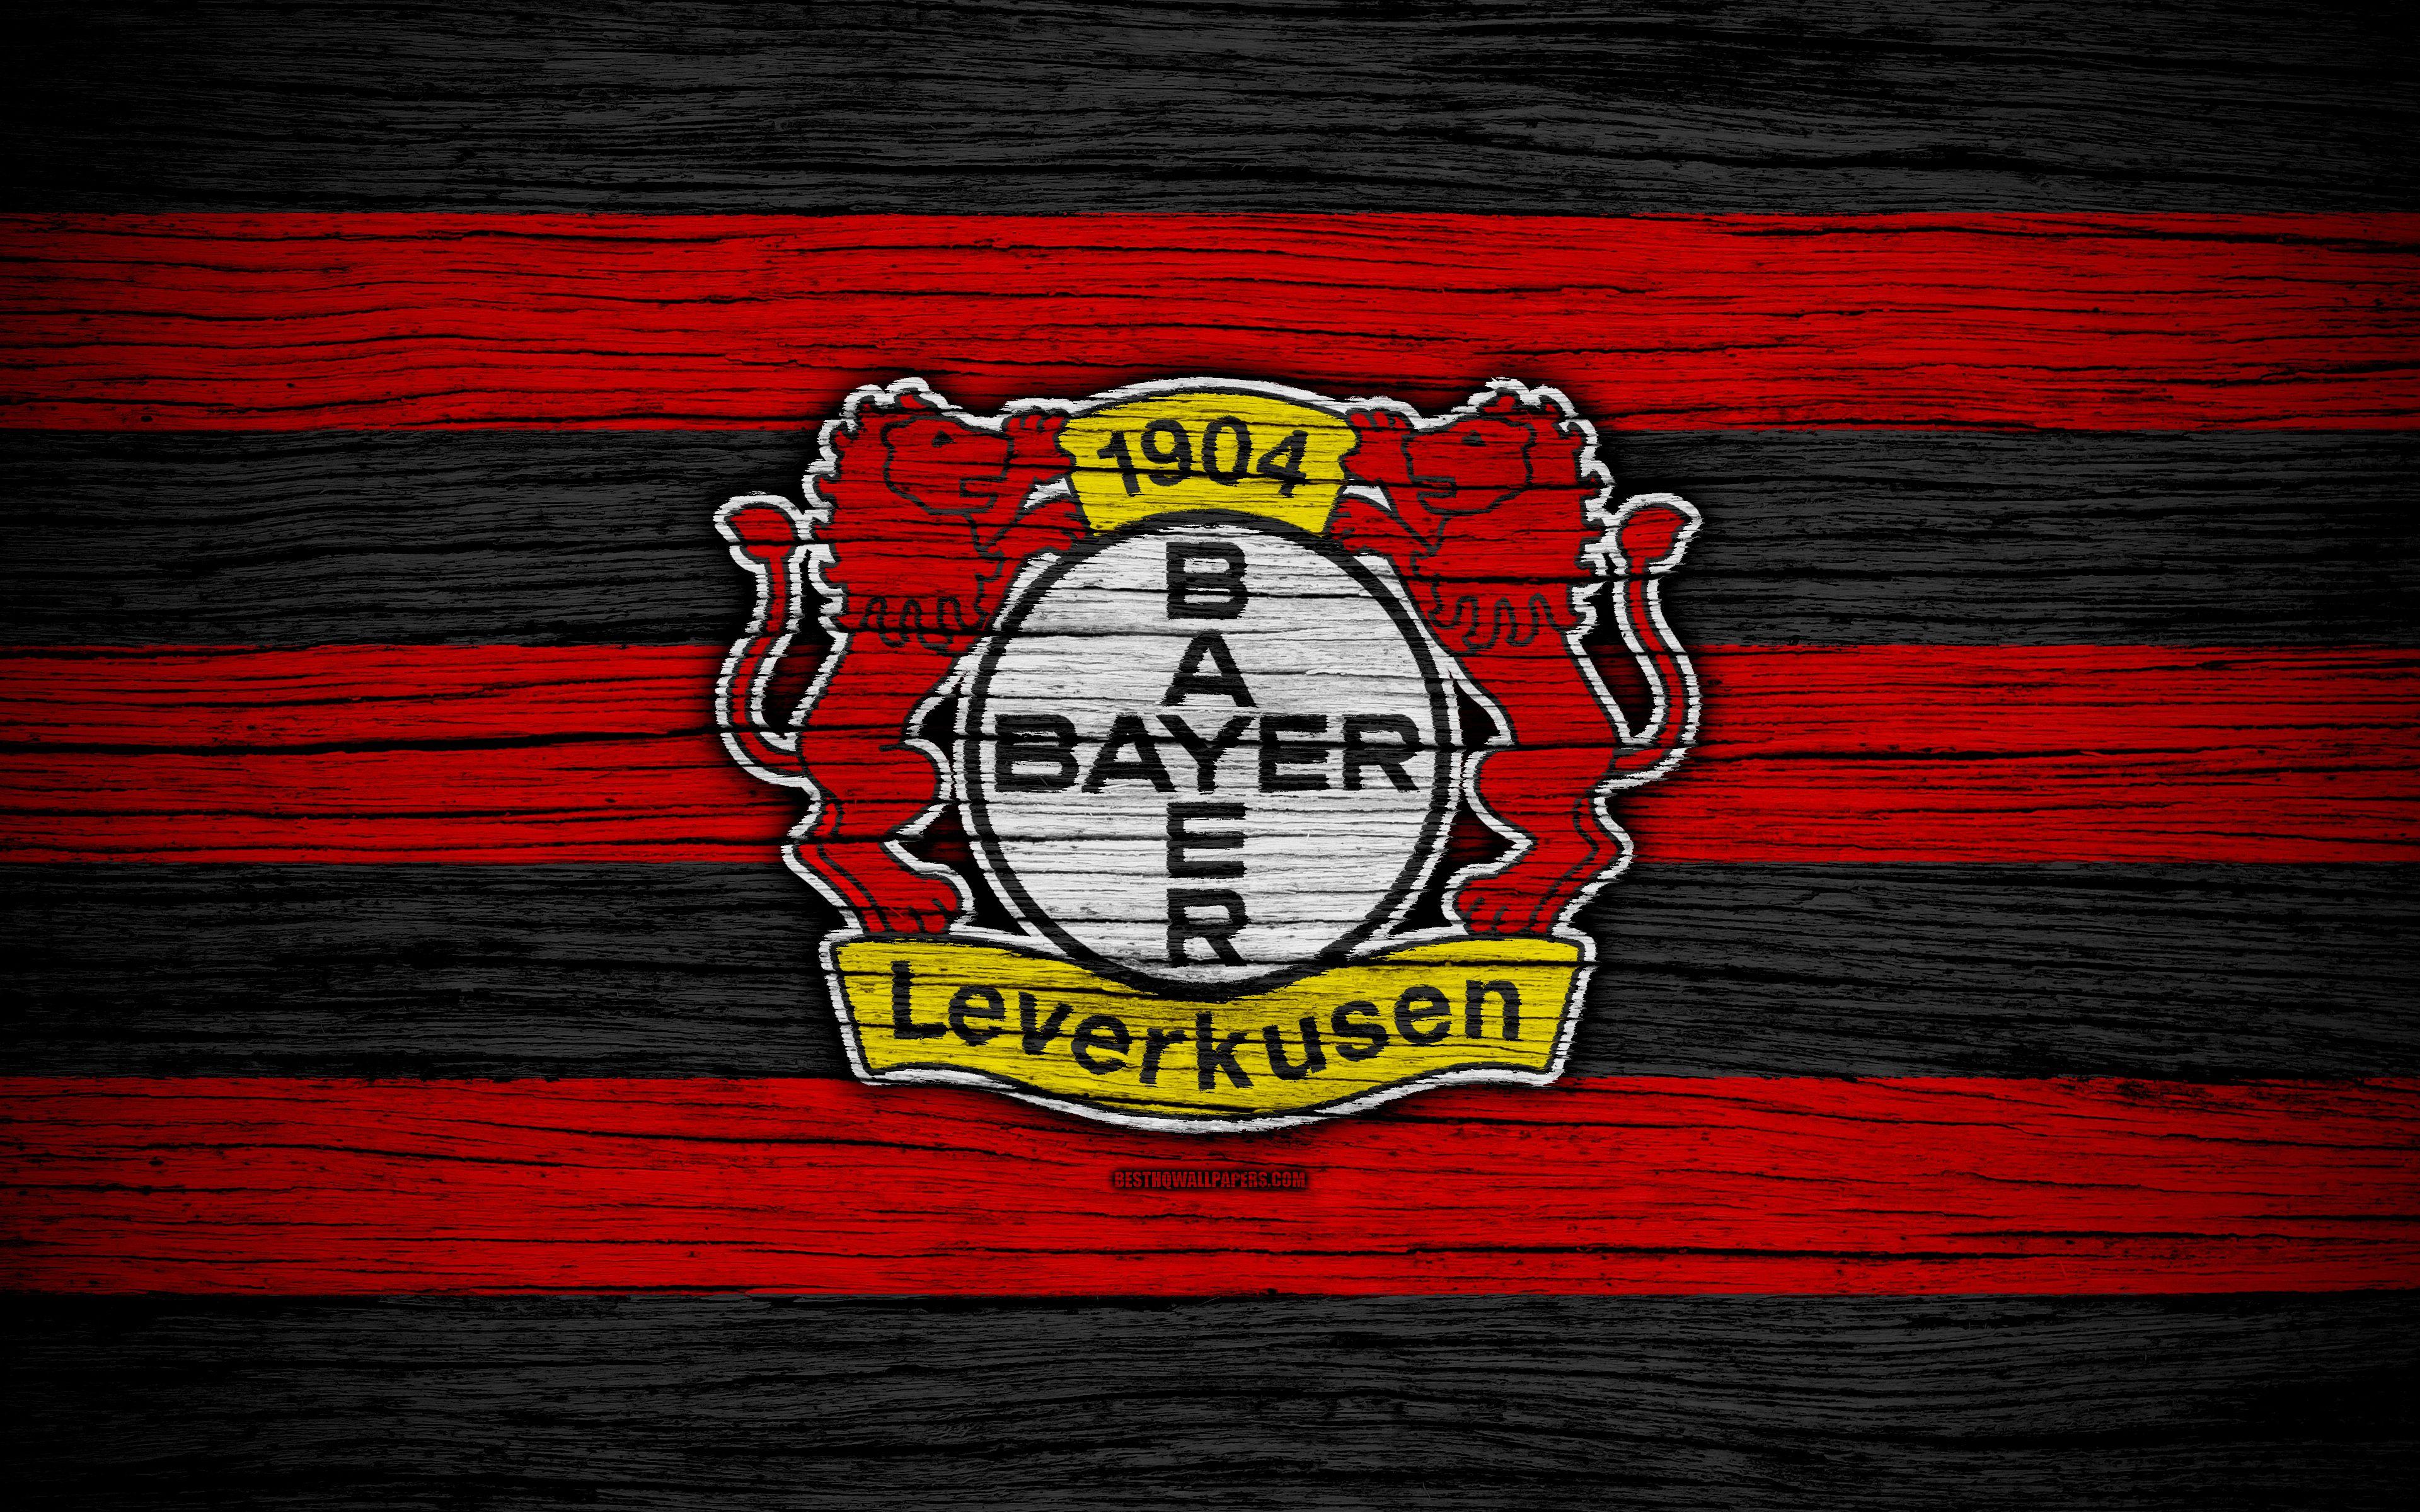 Leverkusen Logo - Bayer 04 Leverkusen Wallpapers - Wallpaper Cave